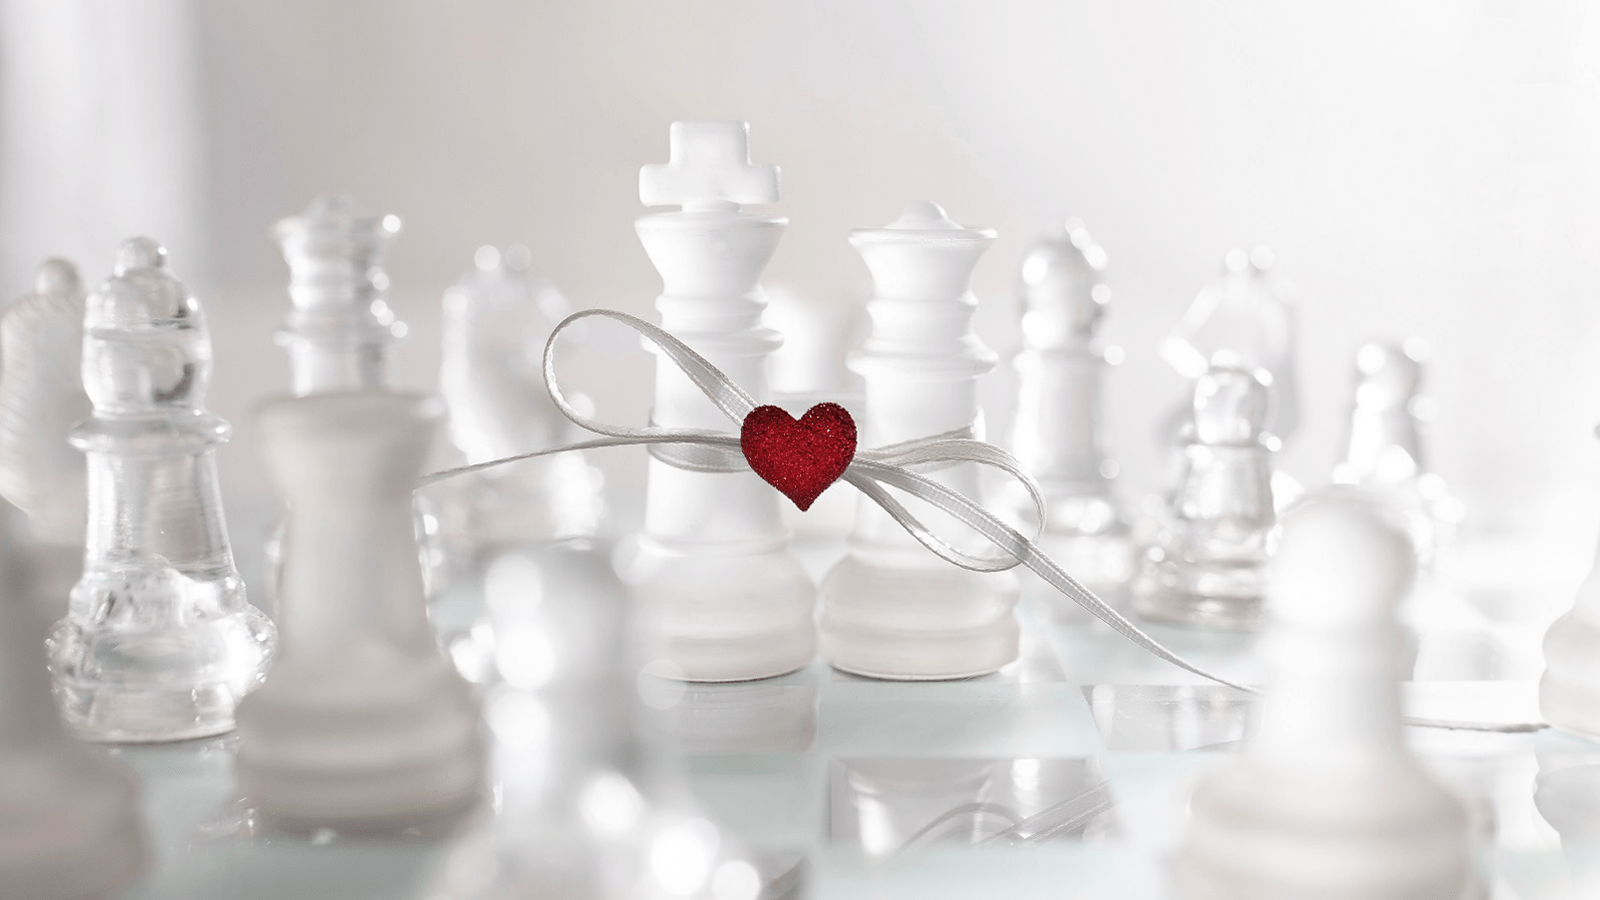 Chess Romances 